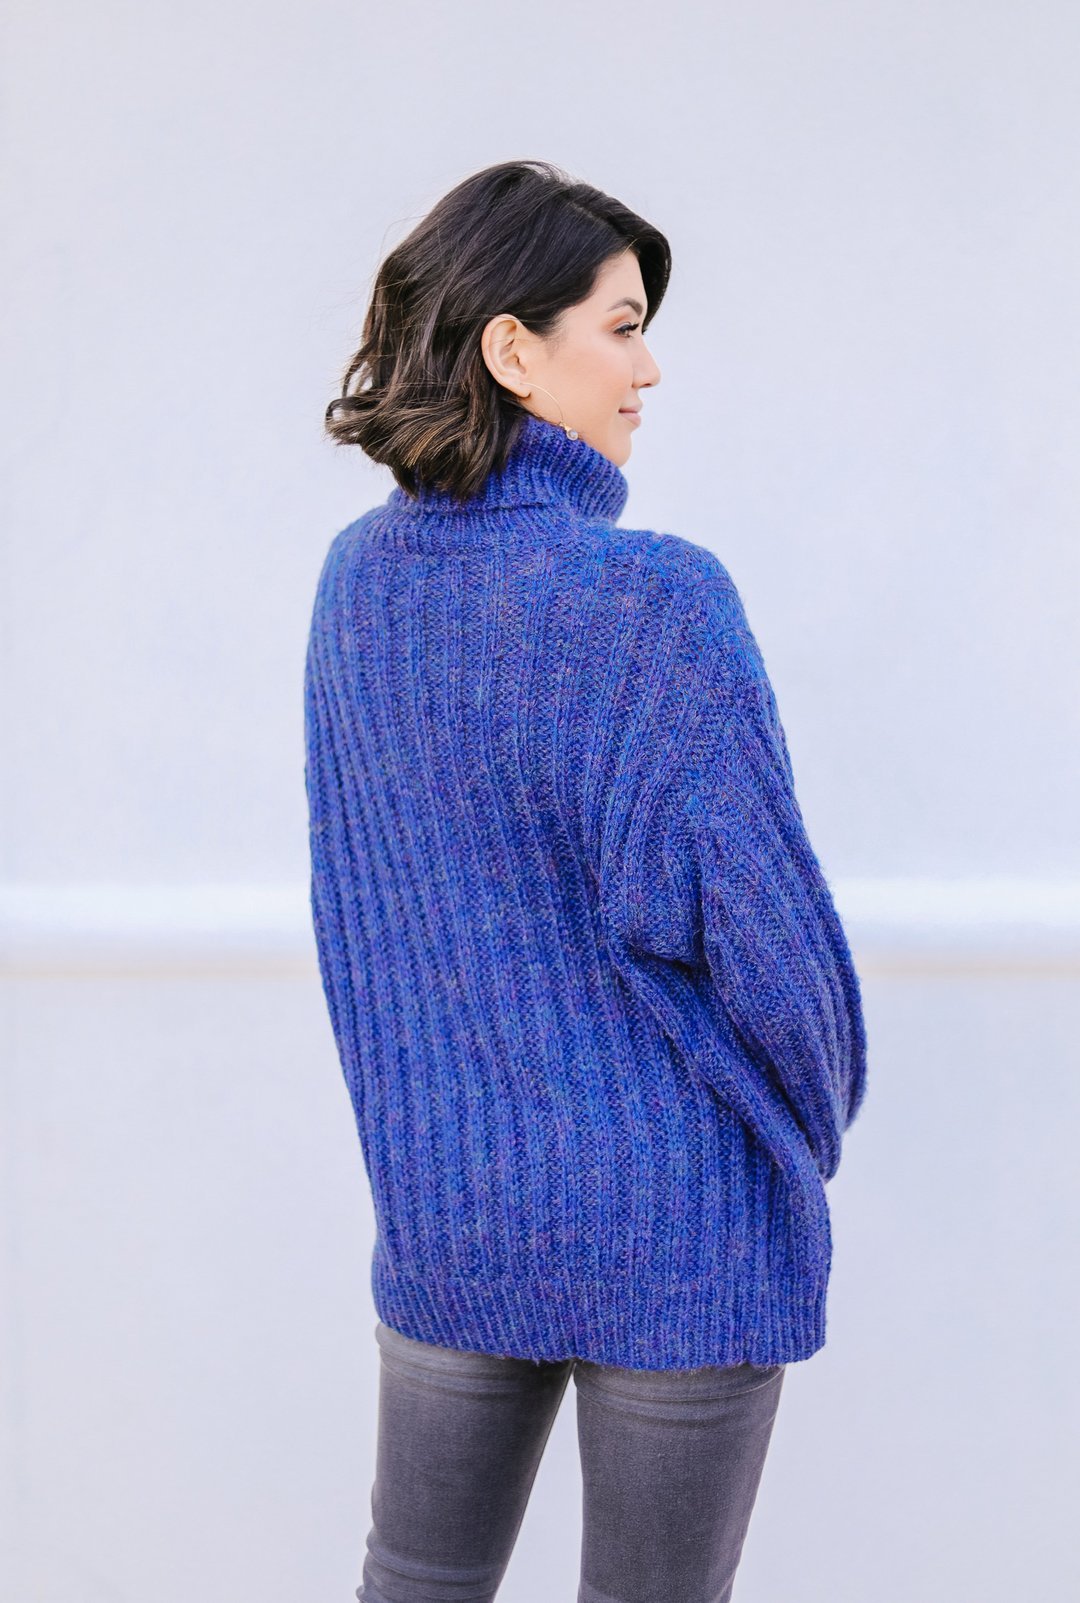 Wintertime Blues Cowl Neck Sweater